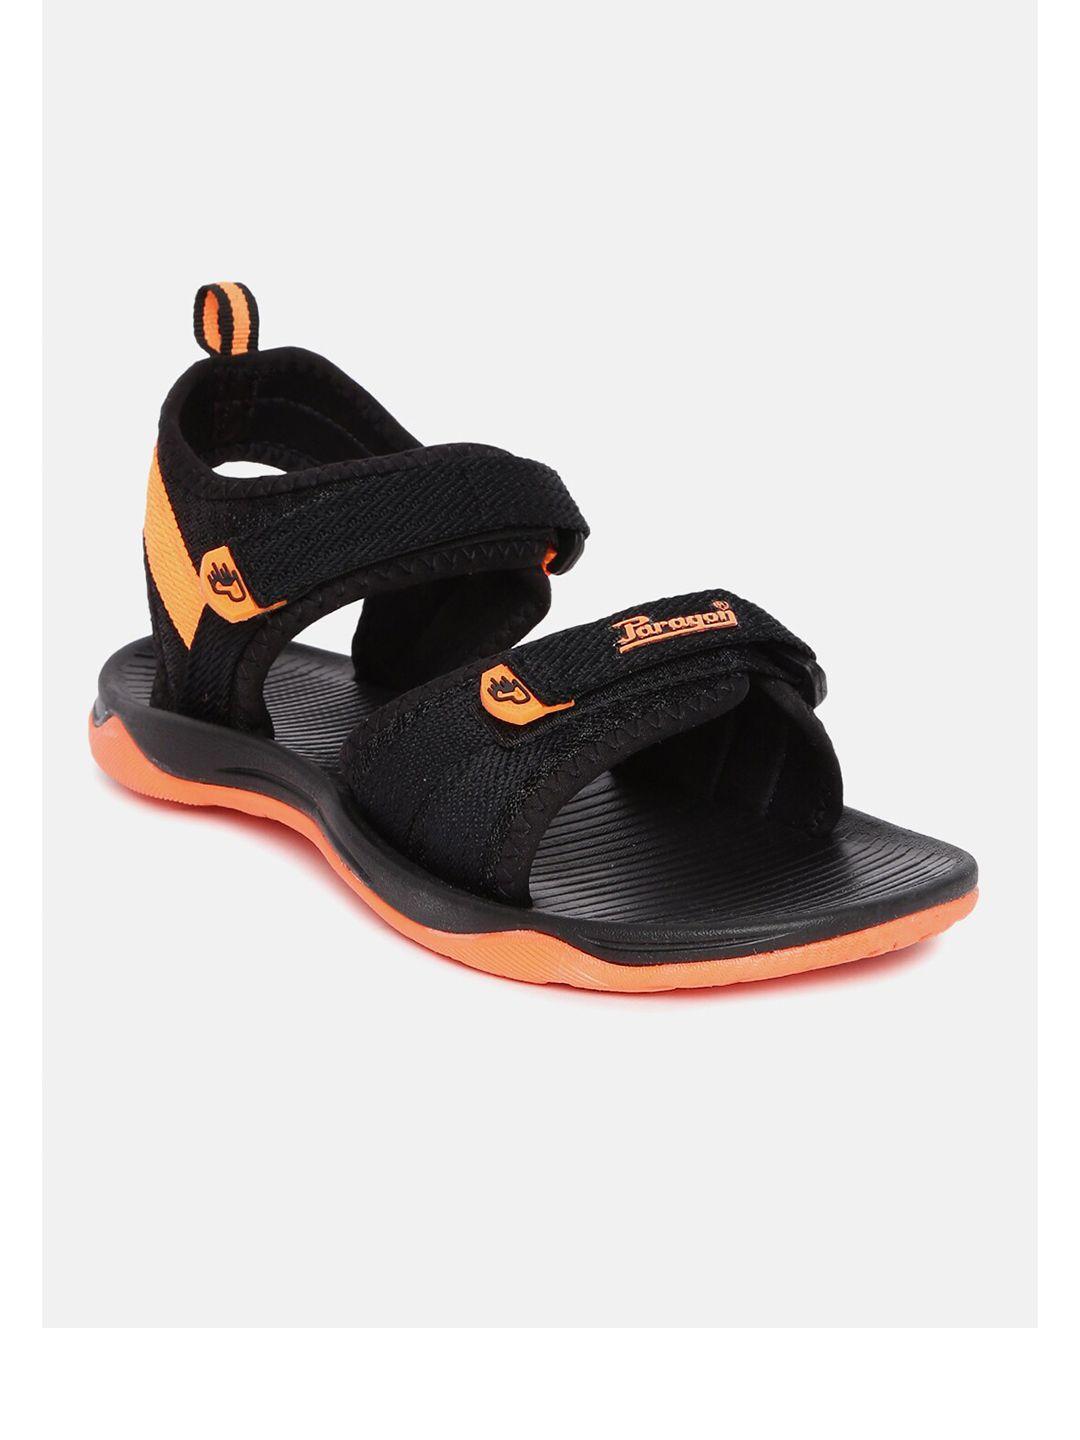 paragon men black & orange sports sandals